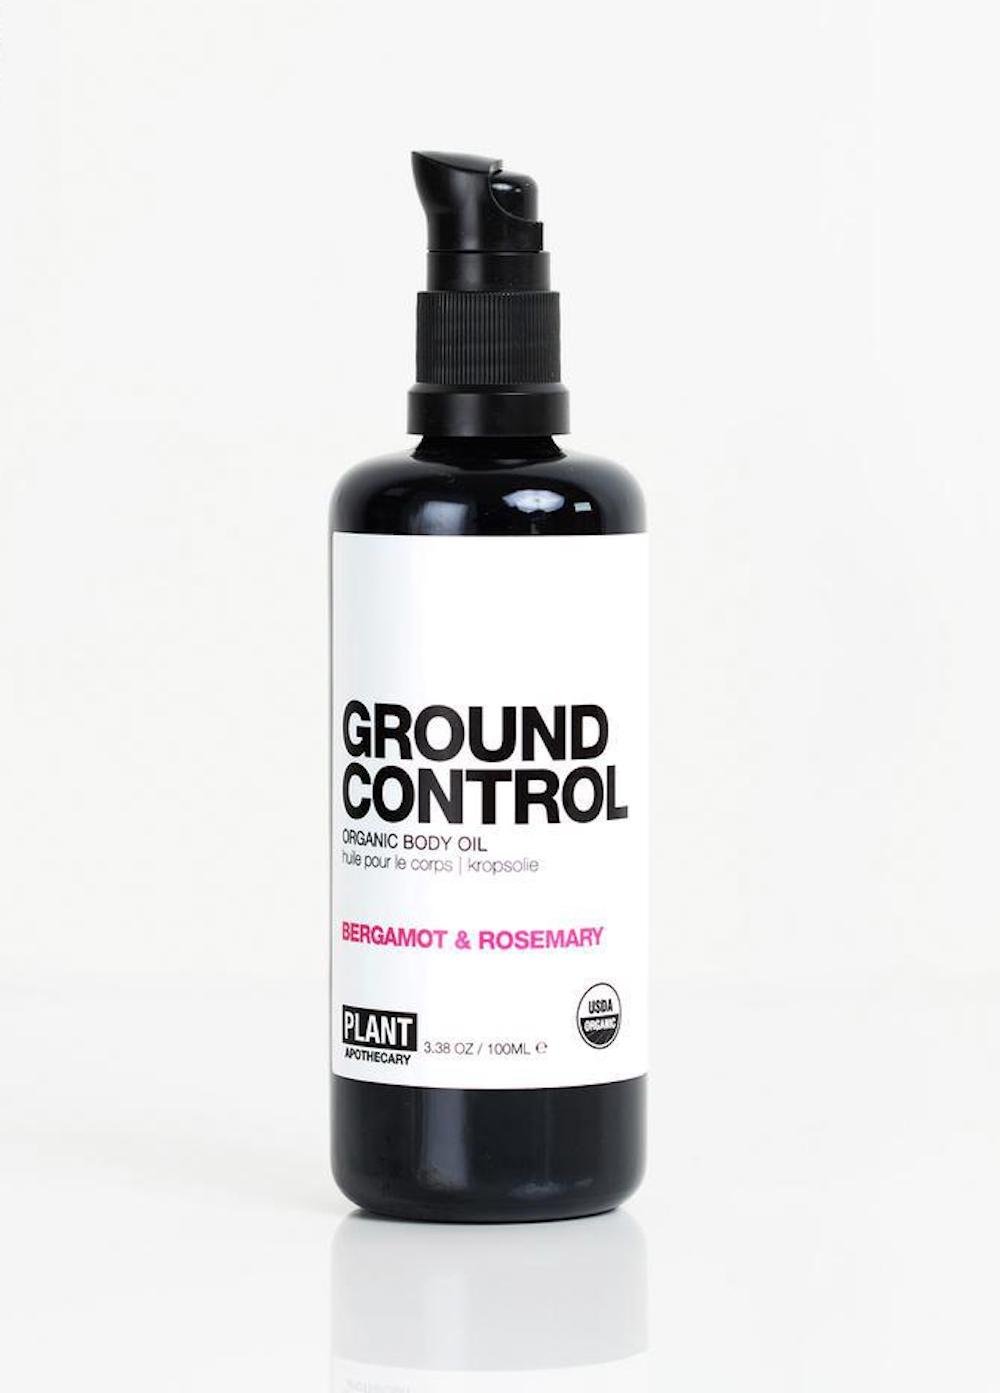 GroundControl, body oil